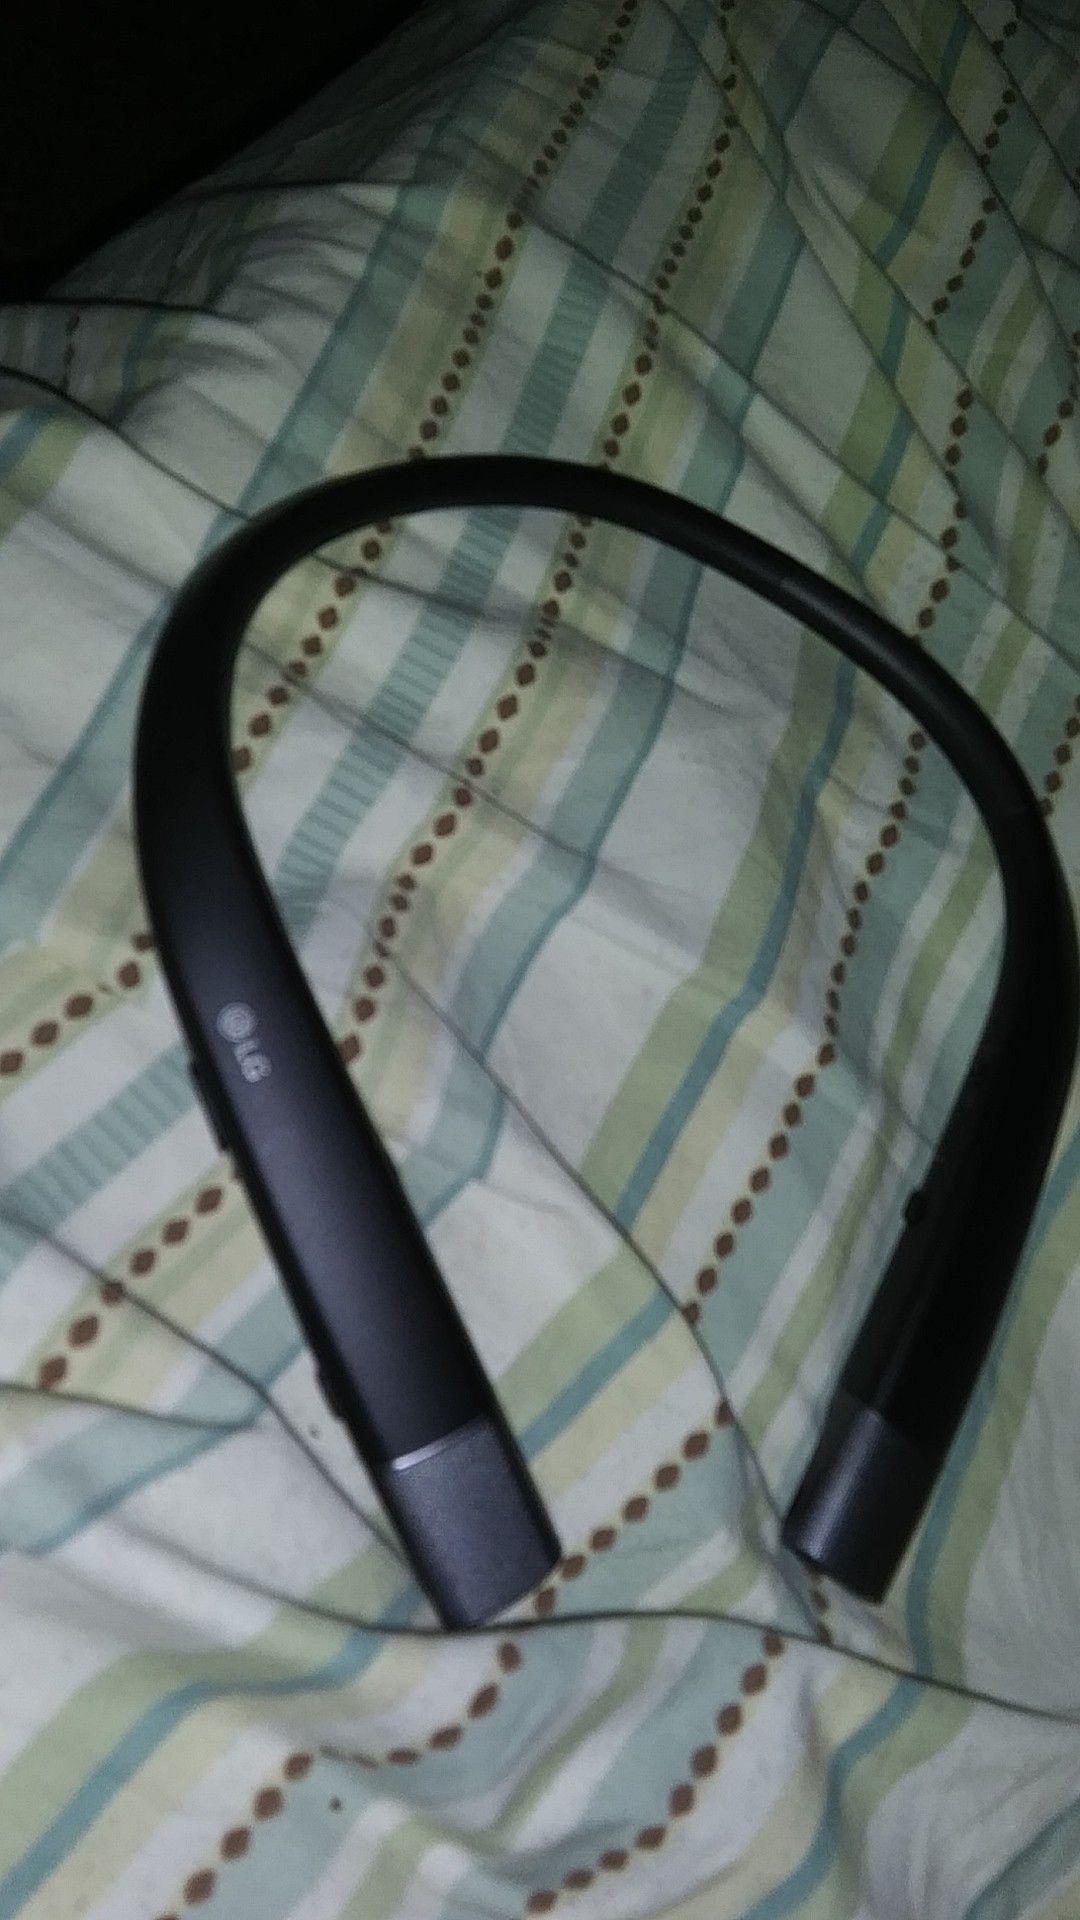 Brand new LG Tone Infusium Bluetooth Headset